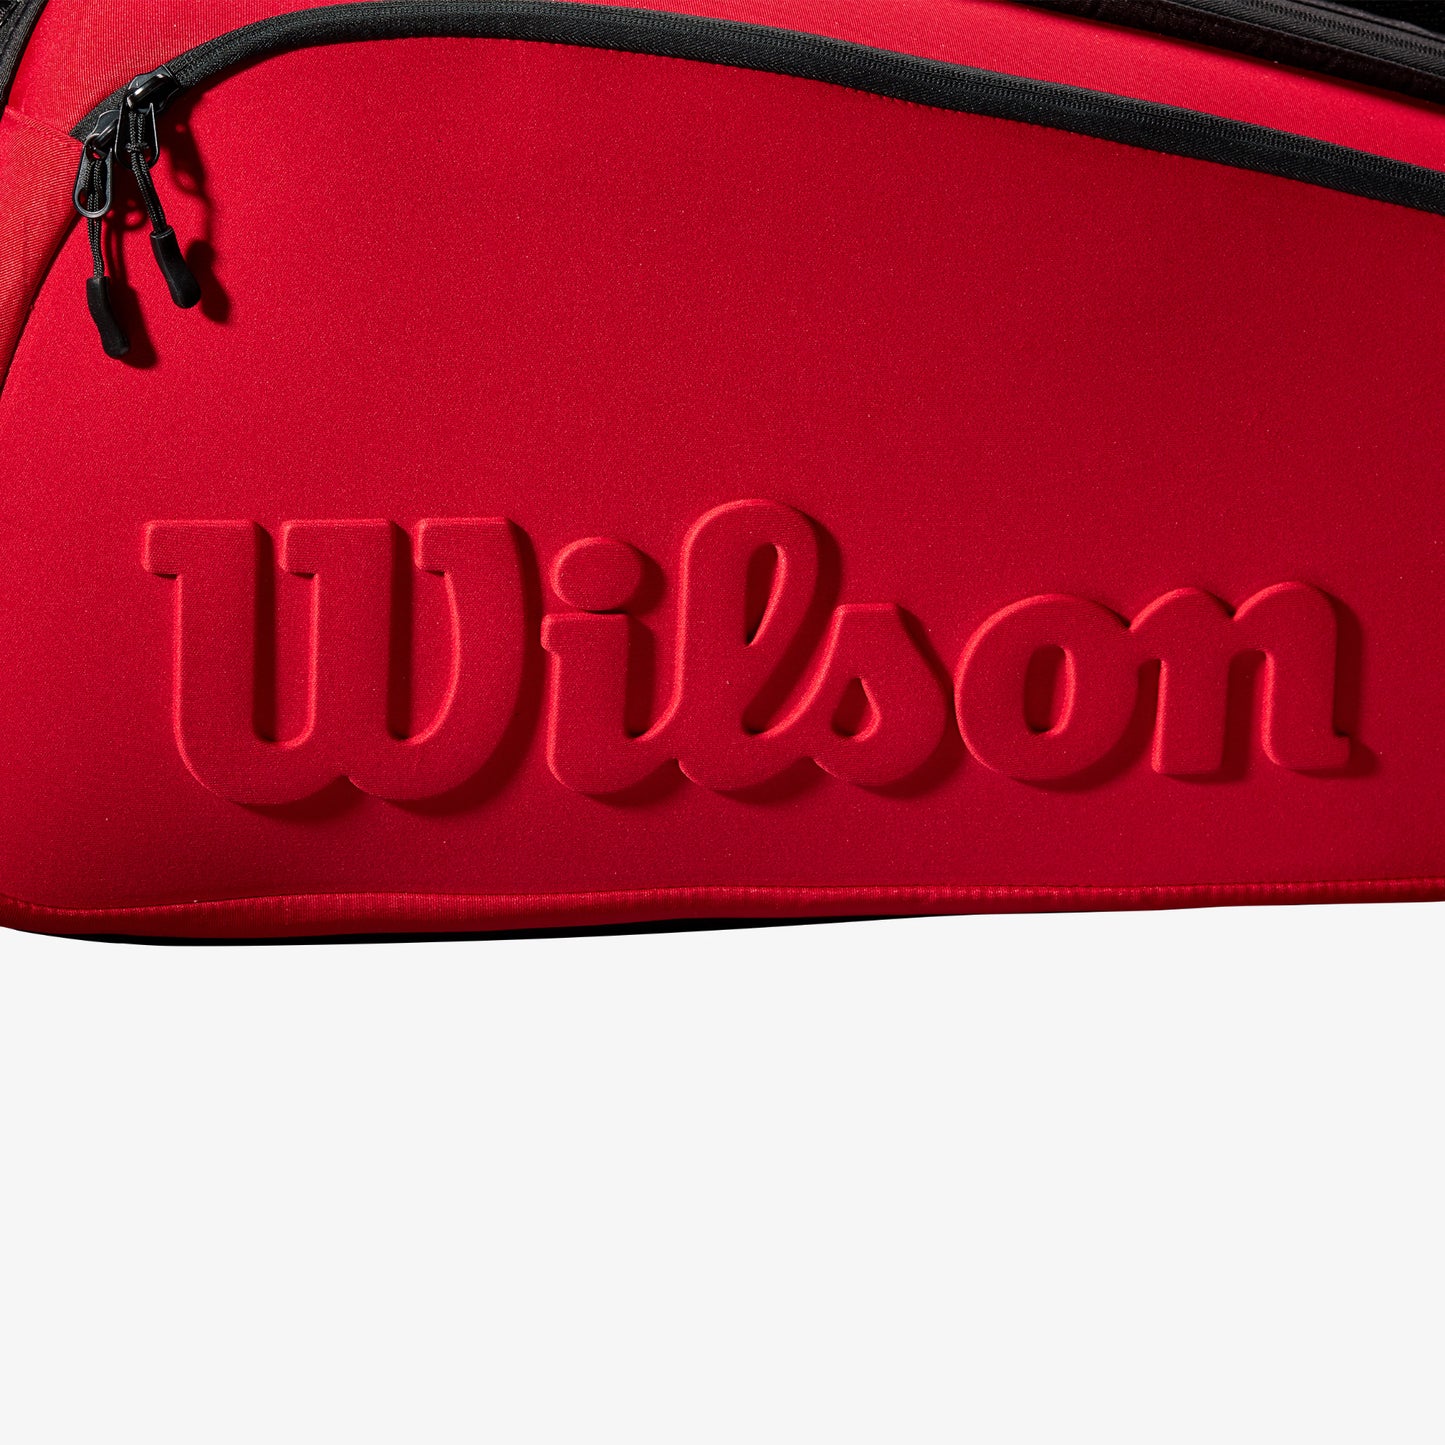 Wilson Clash v2 Super Tour 15 pack bag